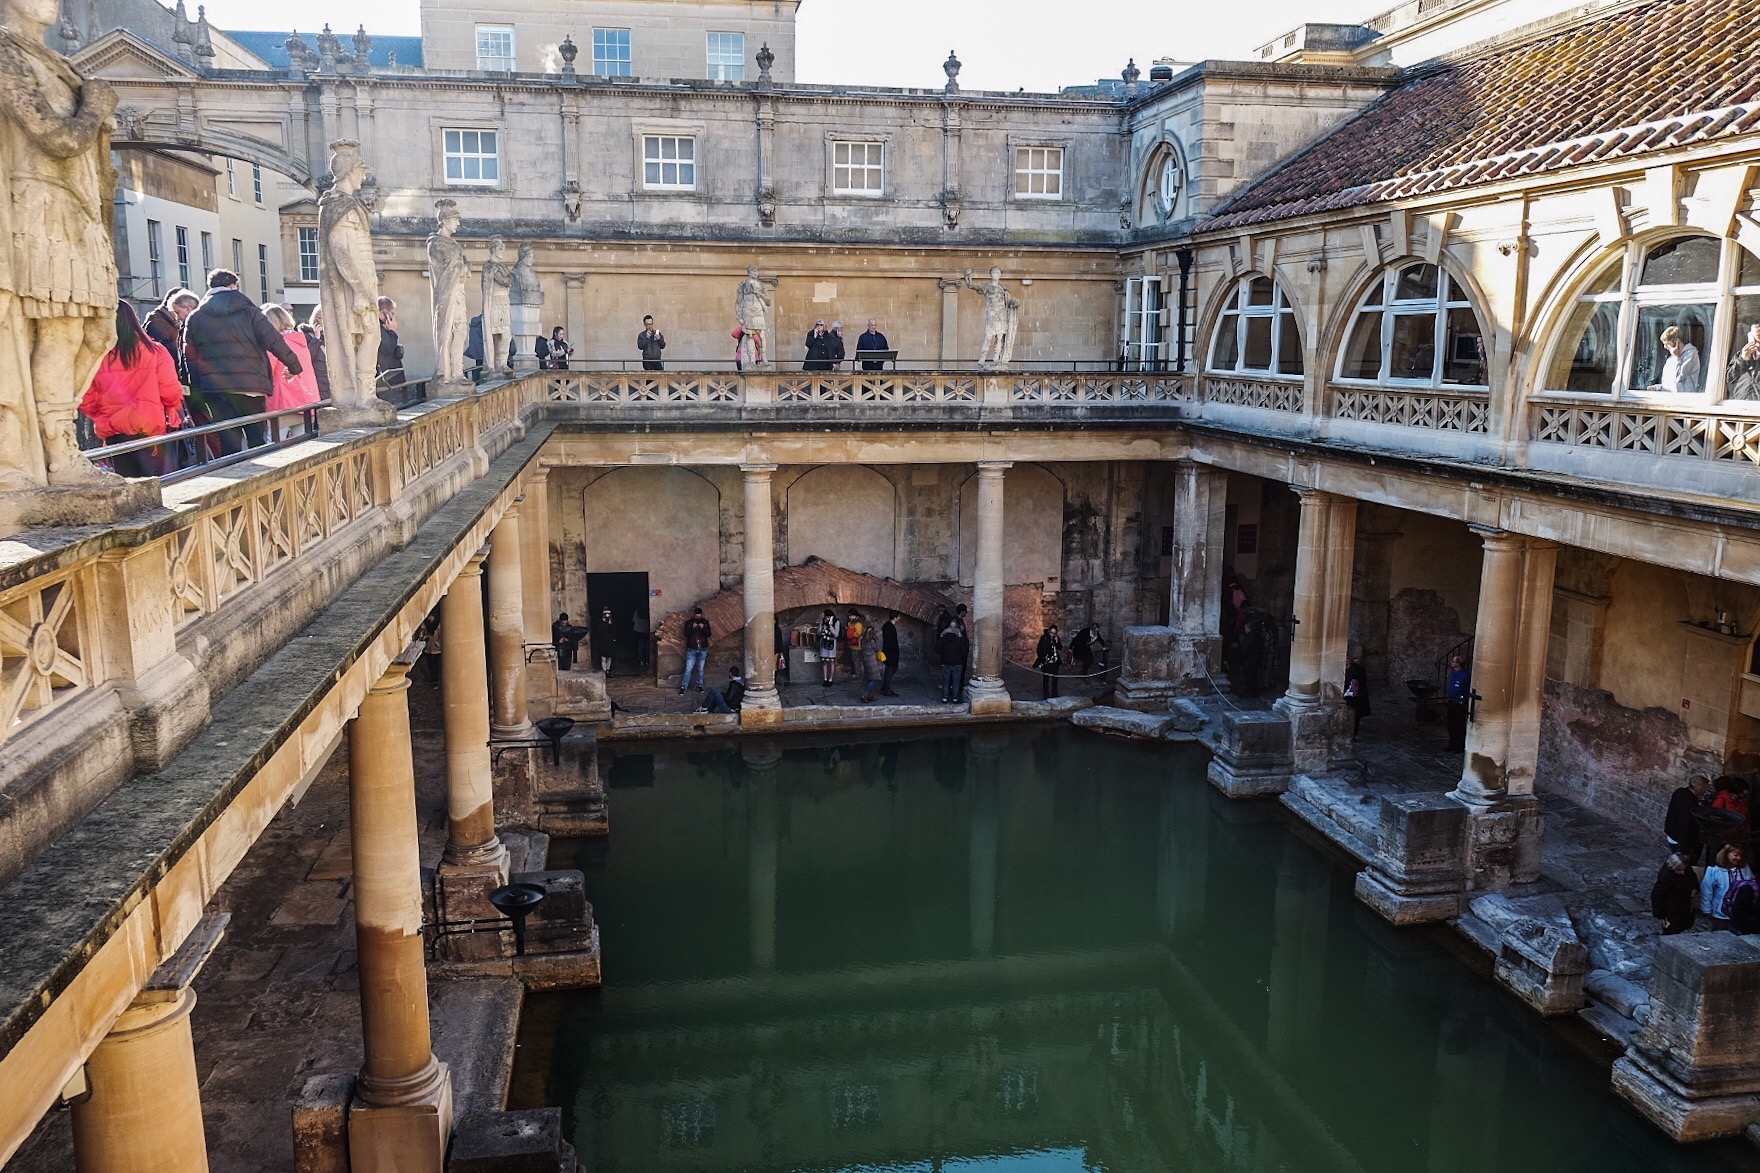 The historic Roman Baths